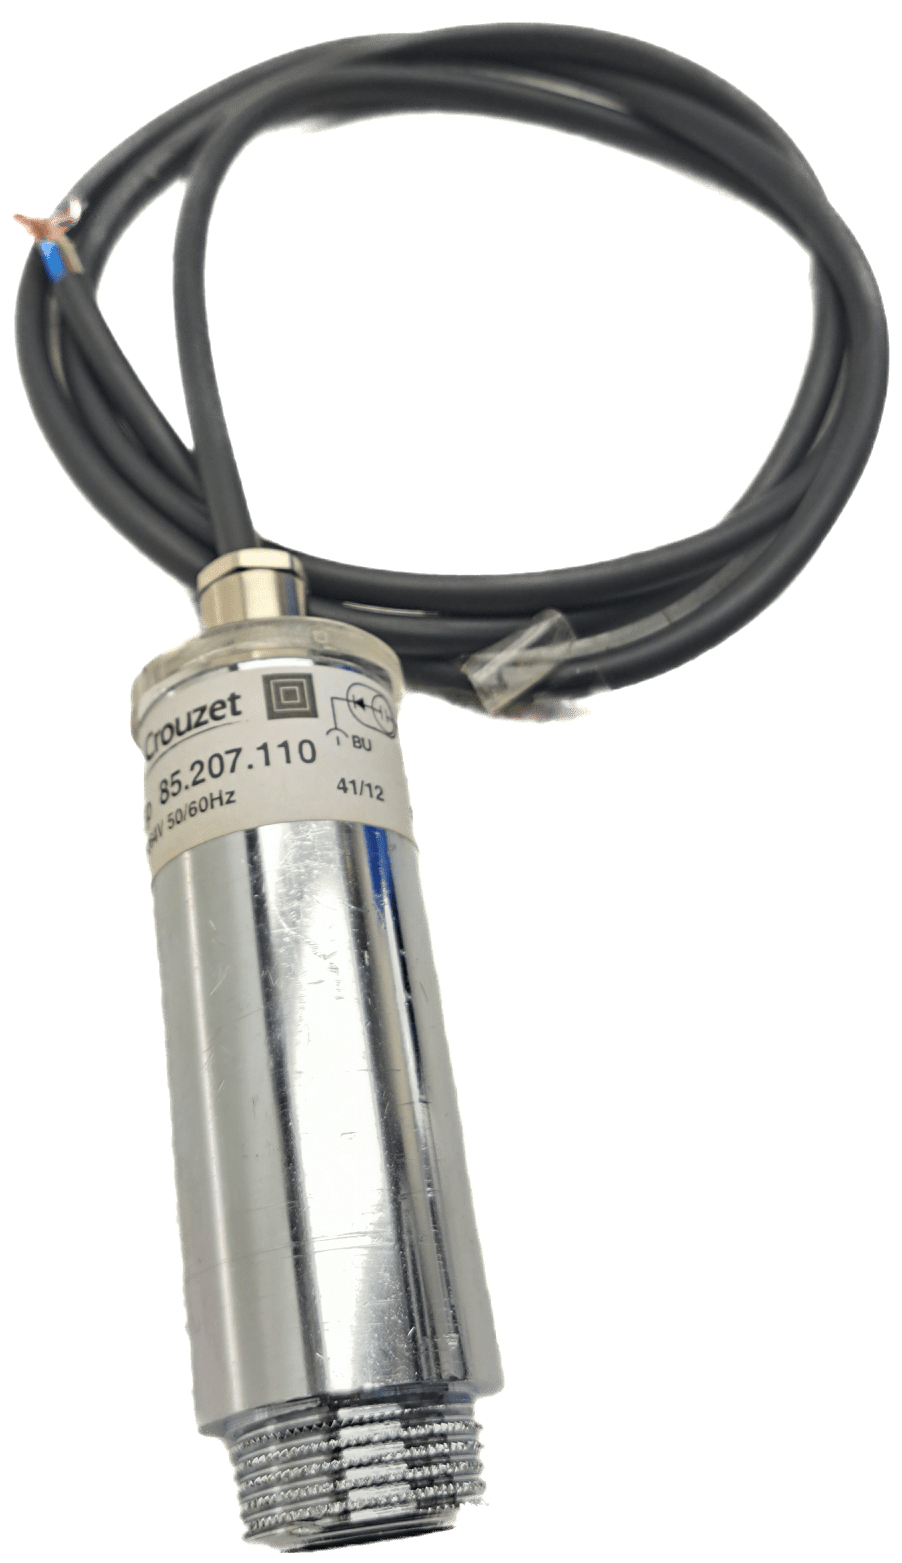 Crouzet 85.207.110 UV-sensor - #product_category# | Klenk Maschinenhandel